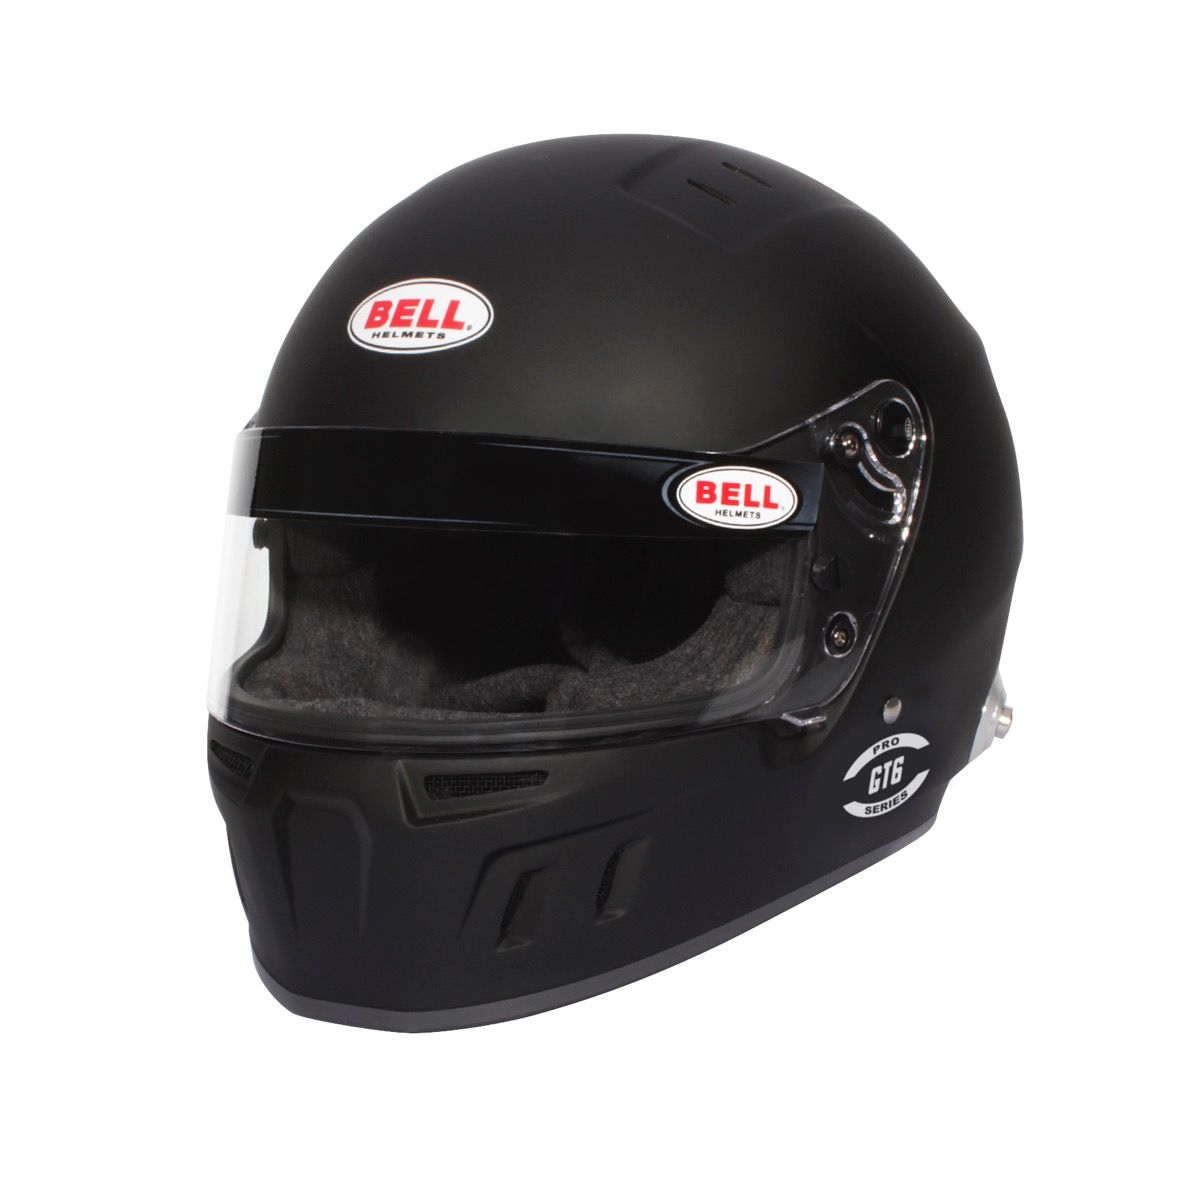 Bell GT6 Matte Black Helmet SA2020 Front View Image